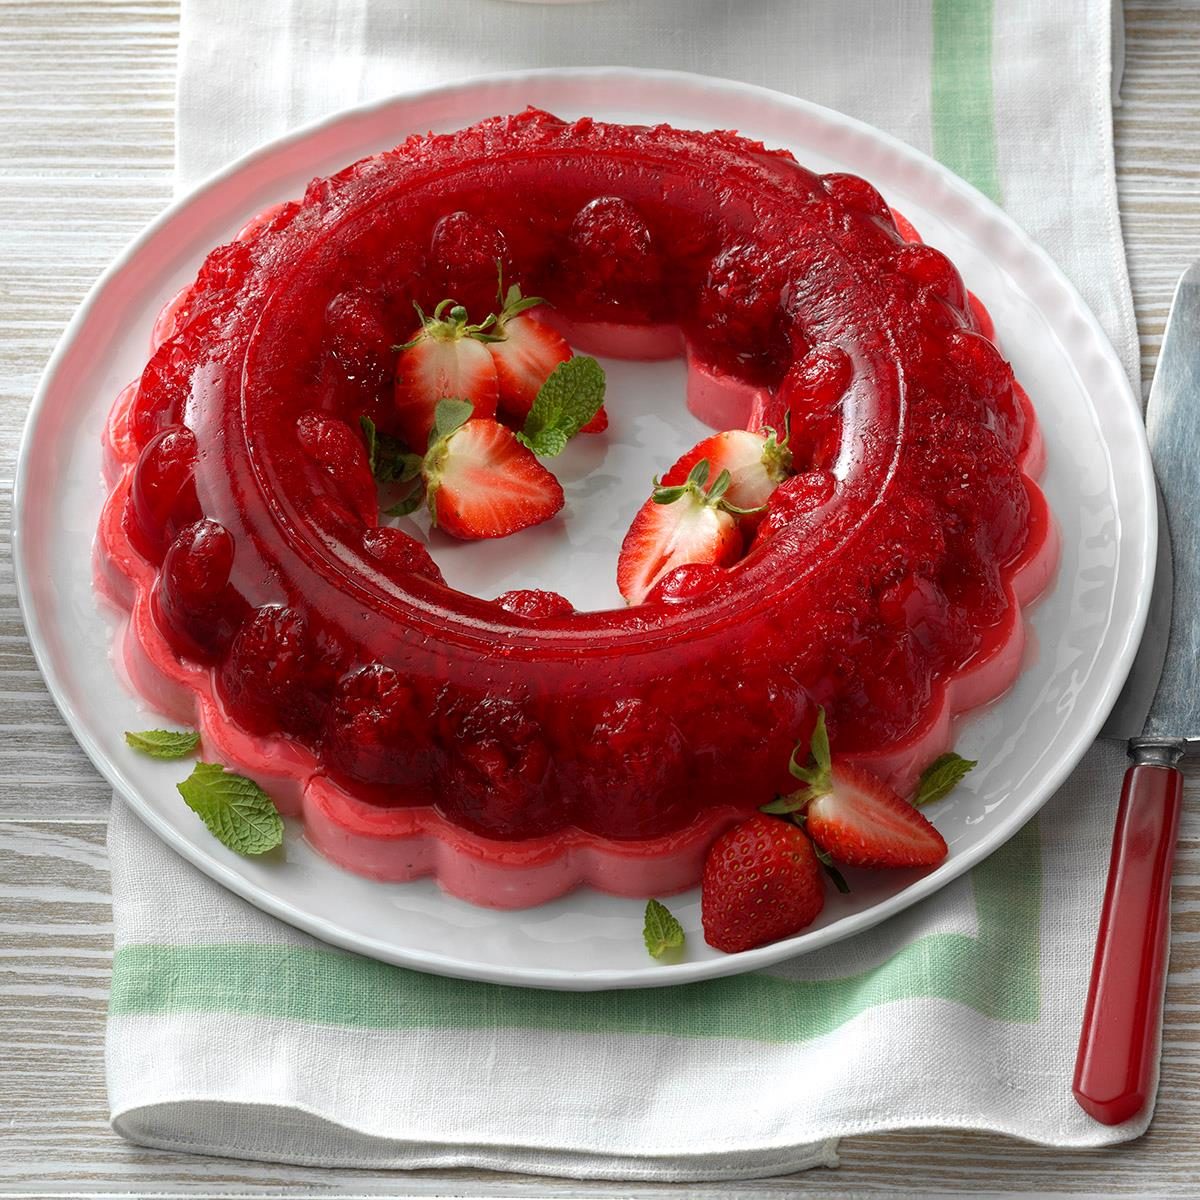 https://www.tasteofhome.com/wp-content/uploads/2018/01/Molded-Strawberry-Salad_EXPS_NDIYD19_7769_C03_21_5B-2.jpg